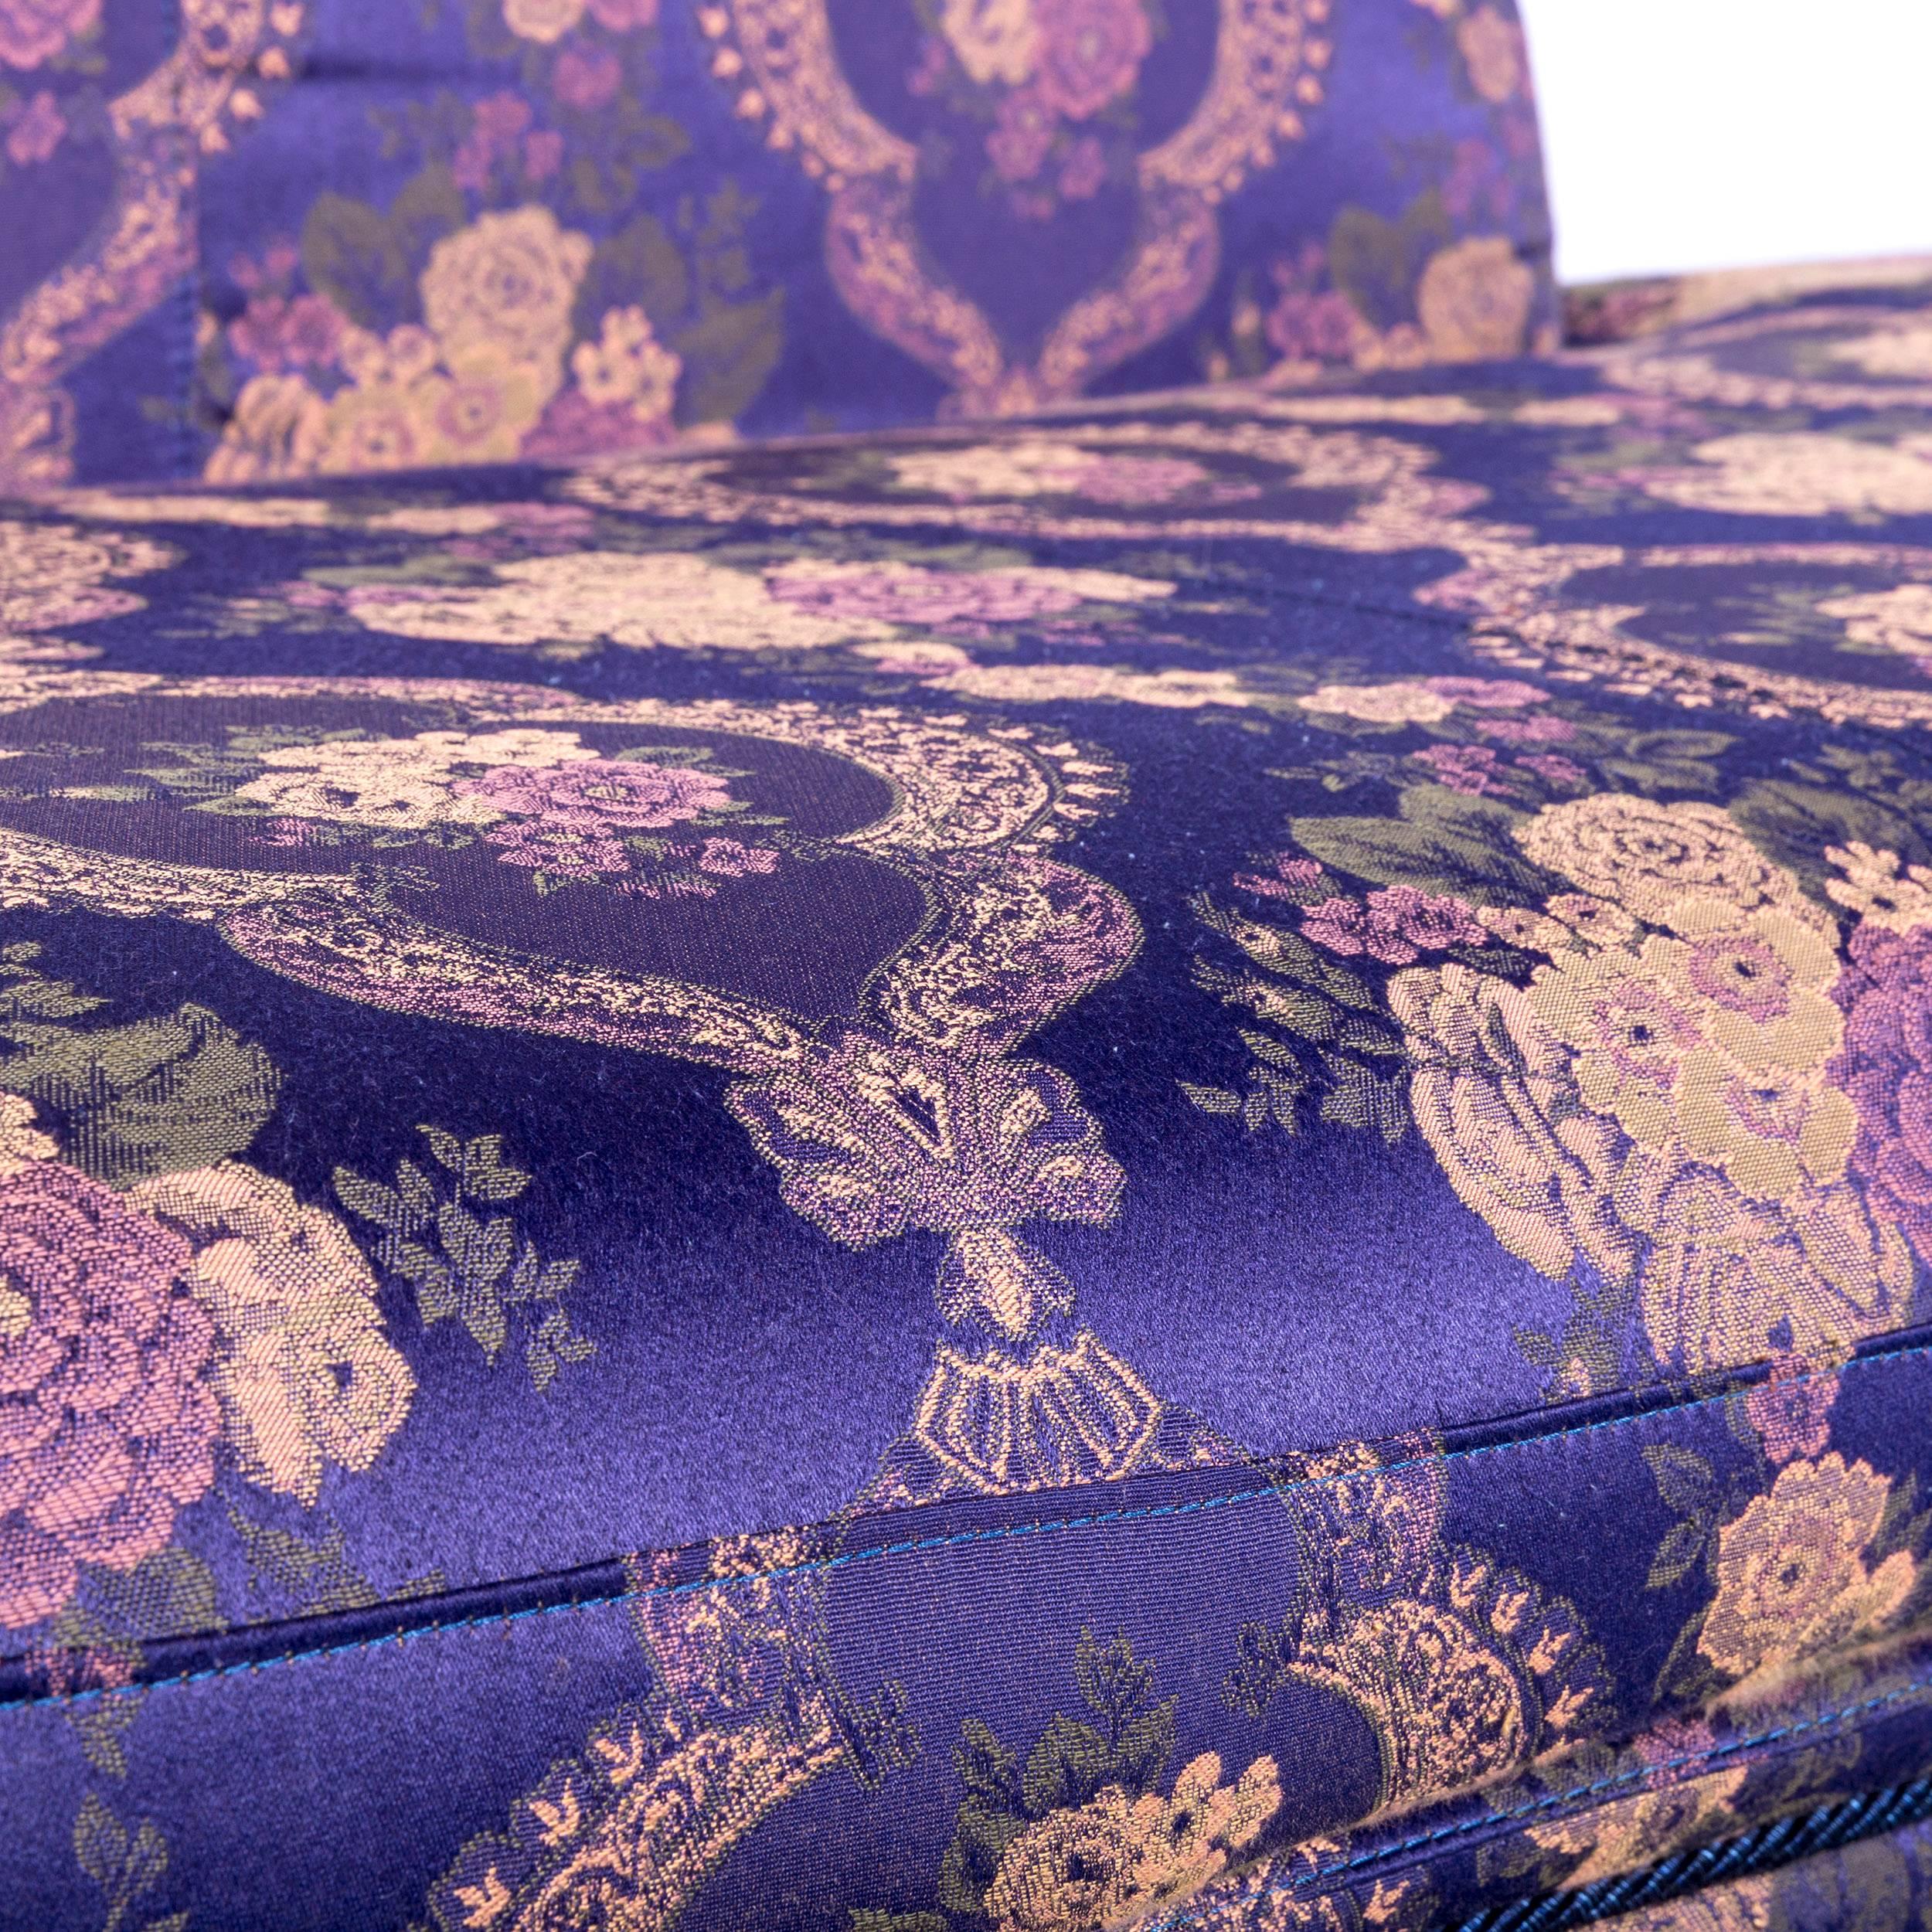 Contemporary Nieri Palatino Designer Sofa Recamier Purple Blue Fabric Couch Flowers